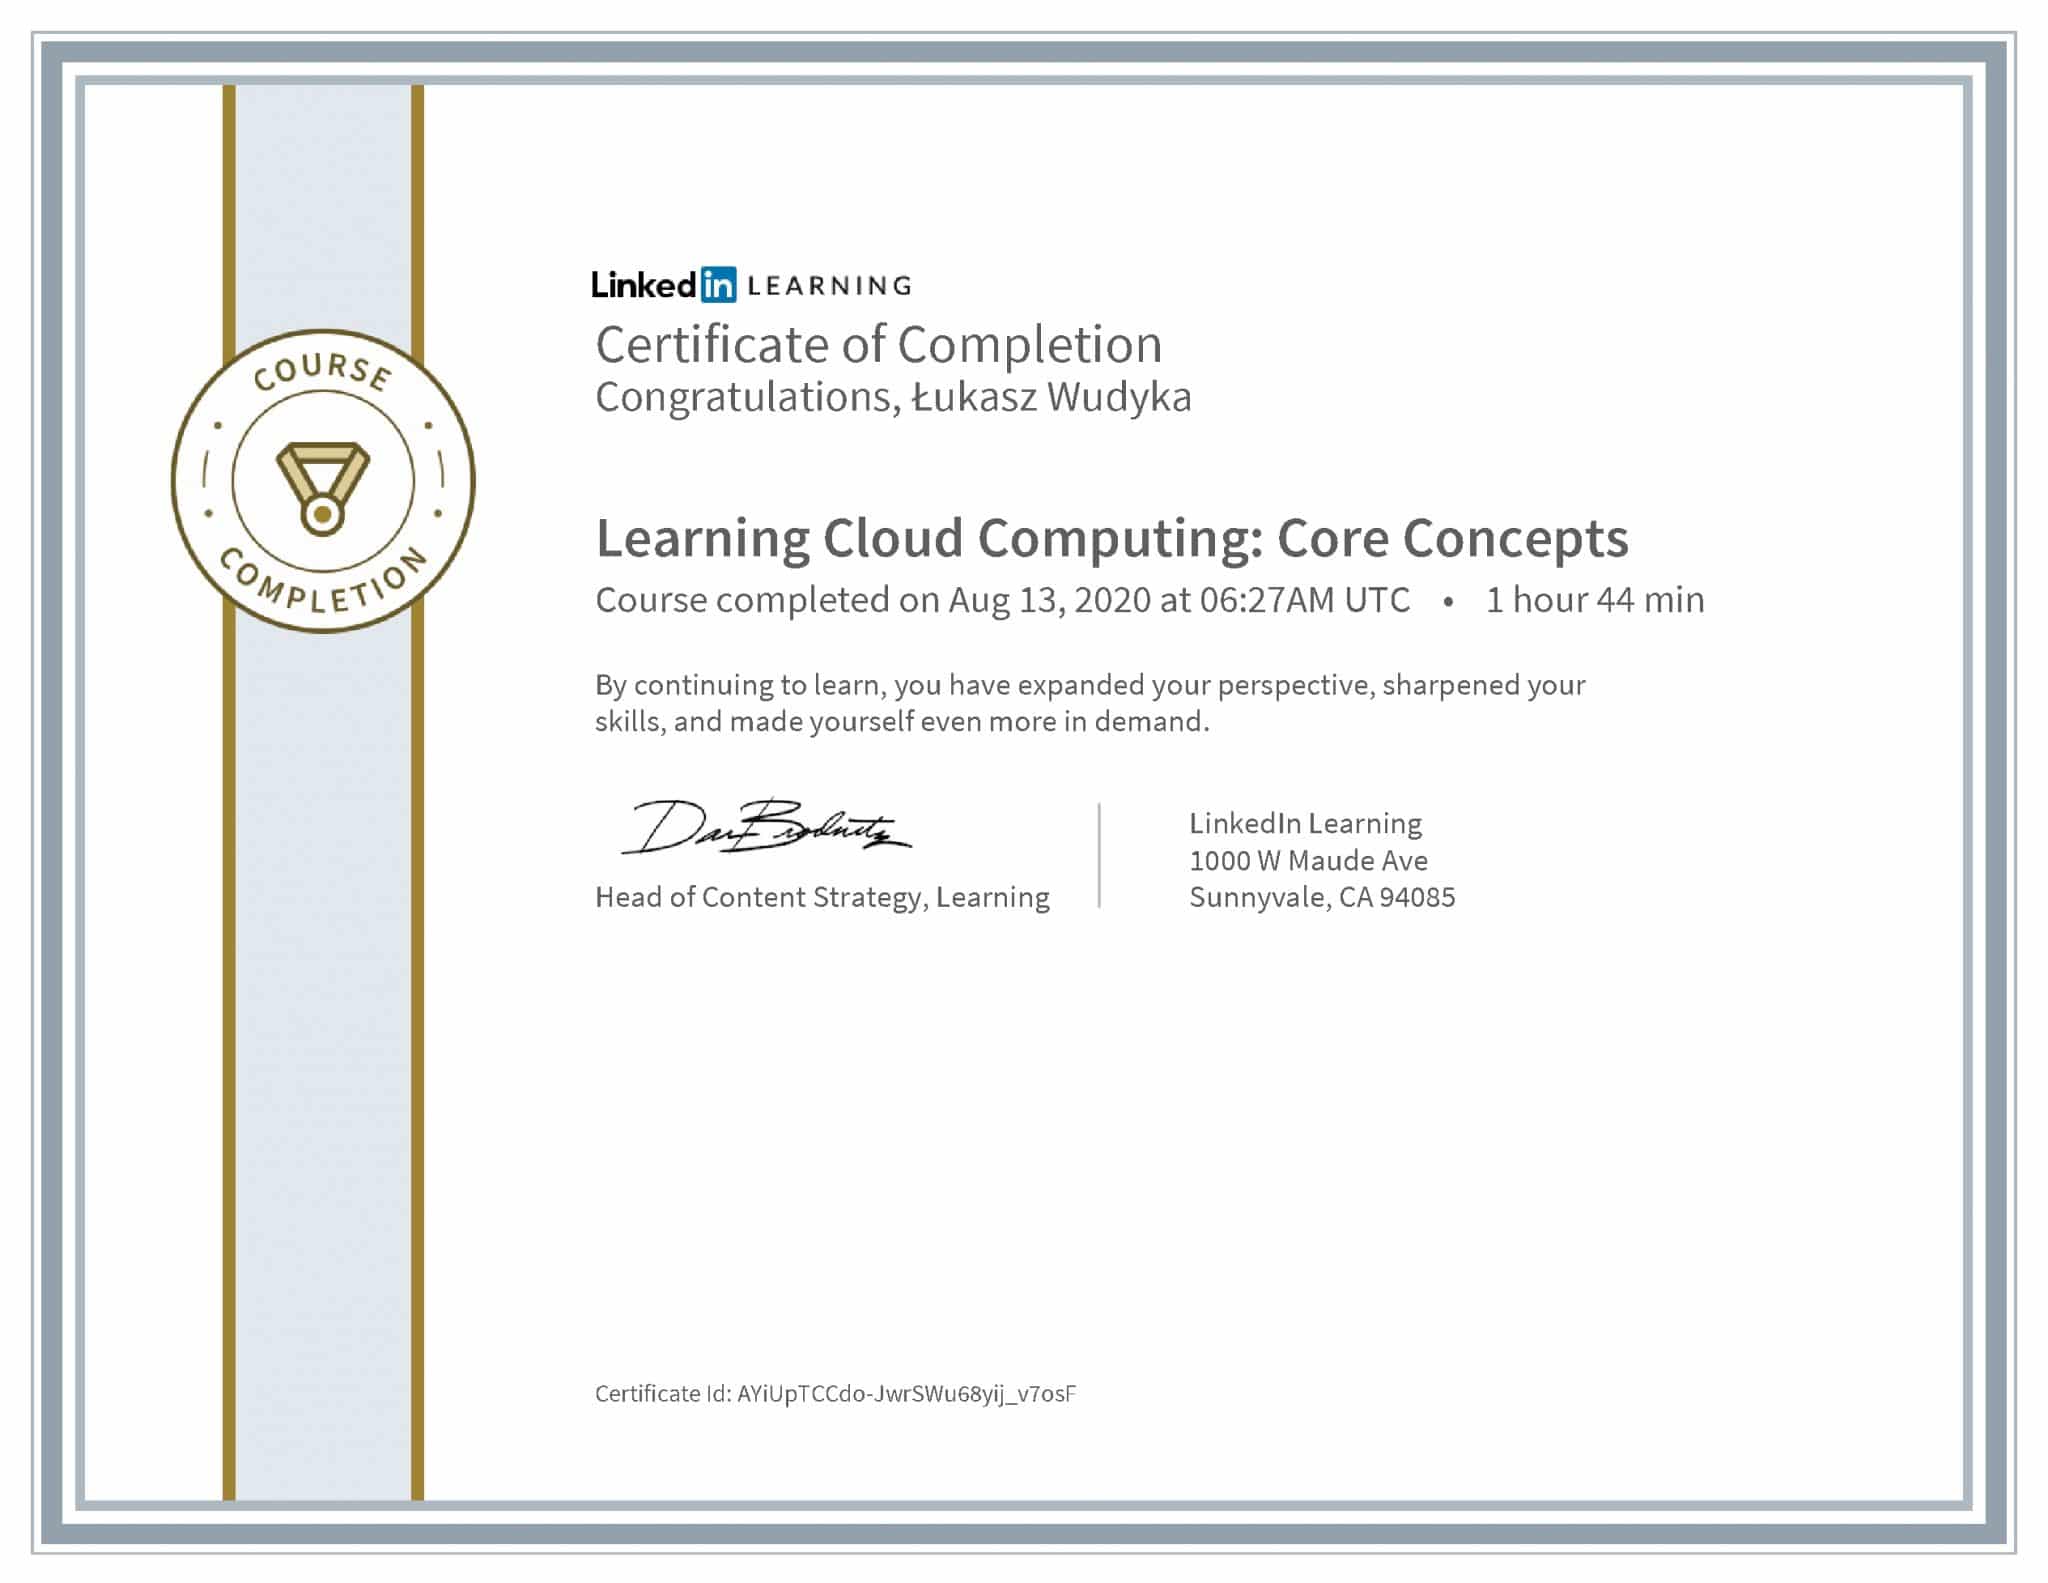 Łukasz Wudyka certyfikat LinkedIn Learning Cloud Computing: Core Concepts